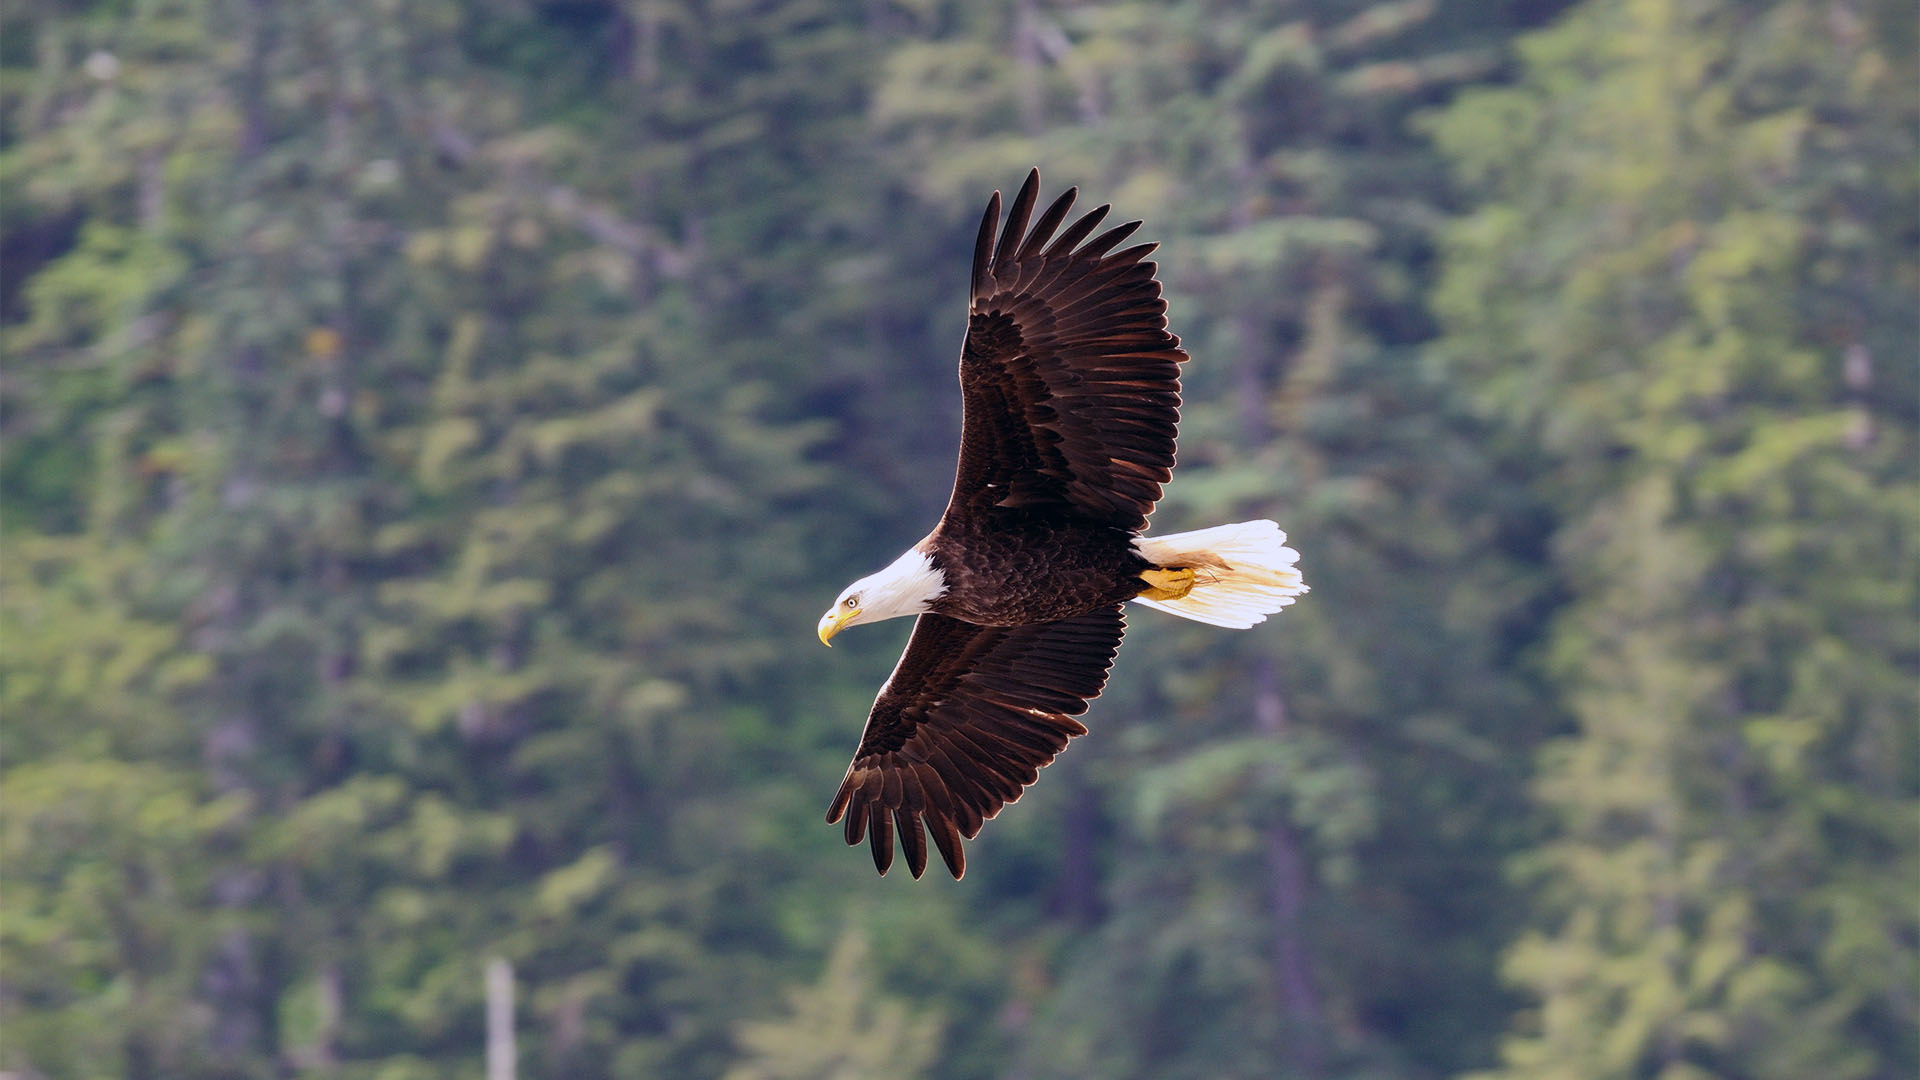 Wild Alaska Live - Wild Bald Eagle in Flight - Twin Cities PBS